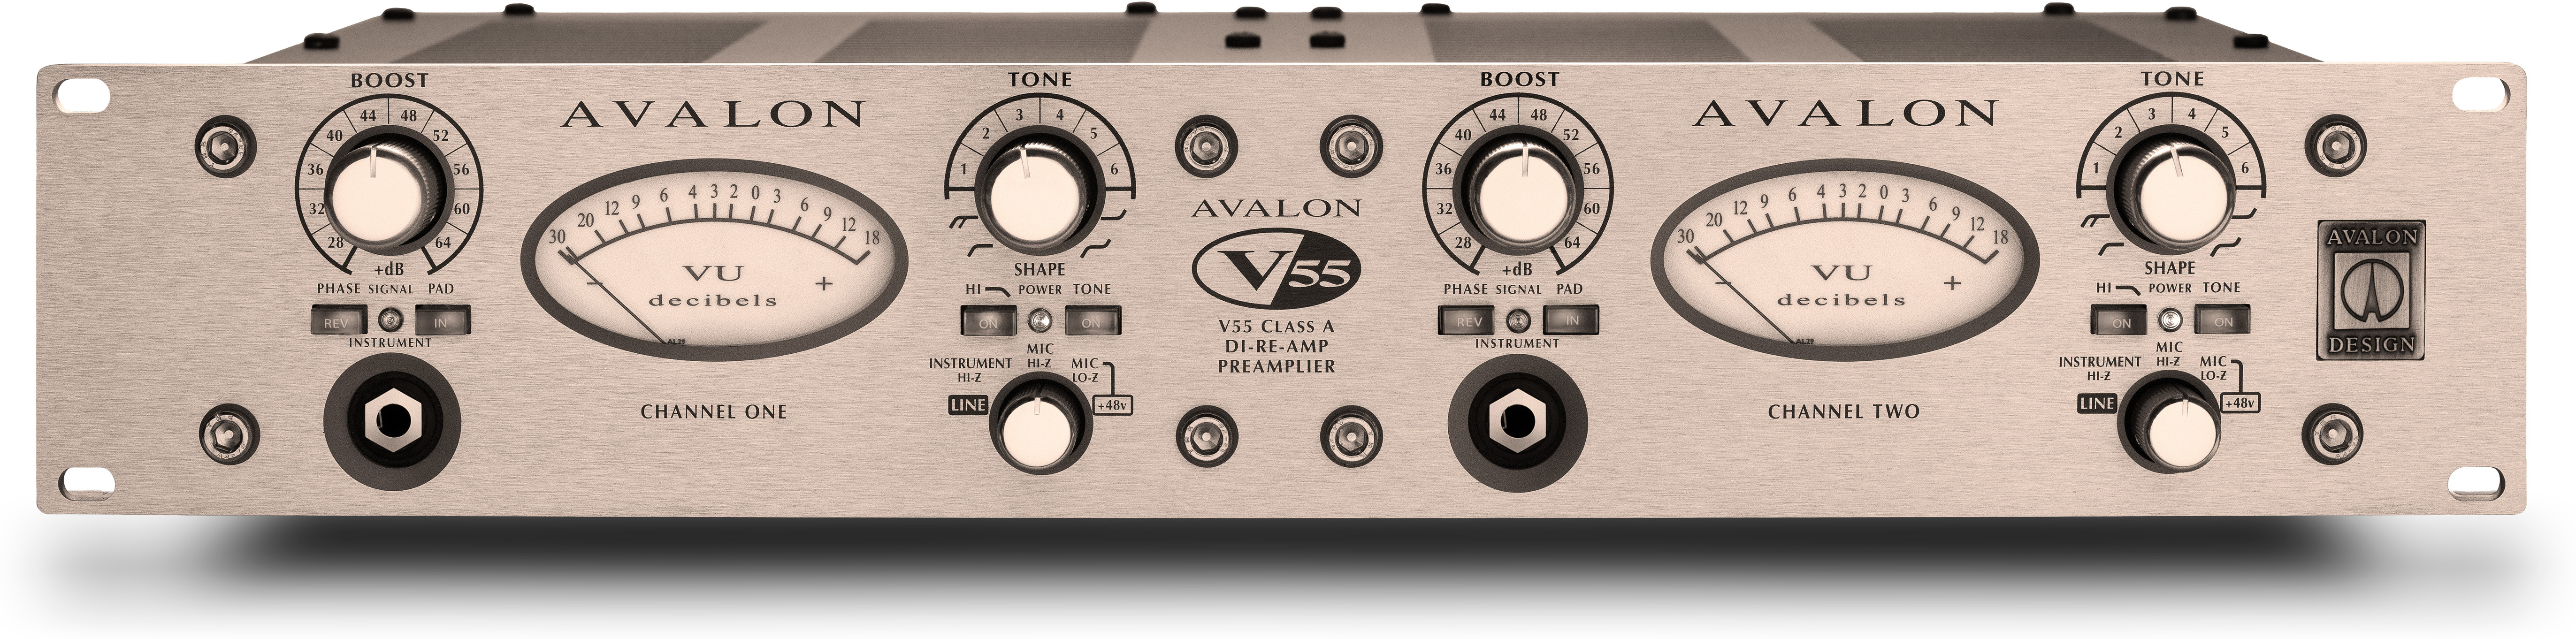 Avalon Design V55 - Vorverstärker - Main picture